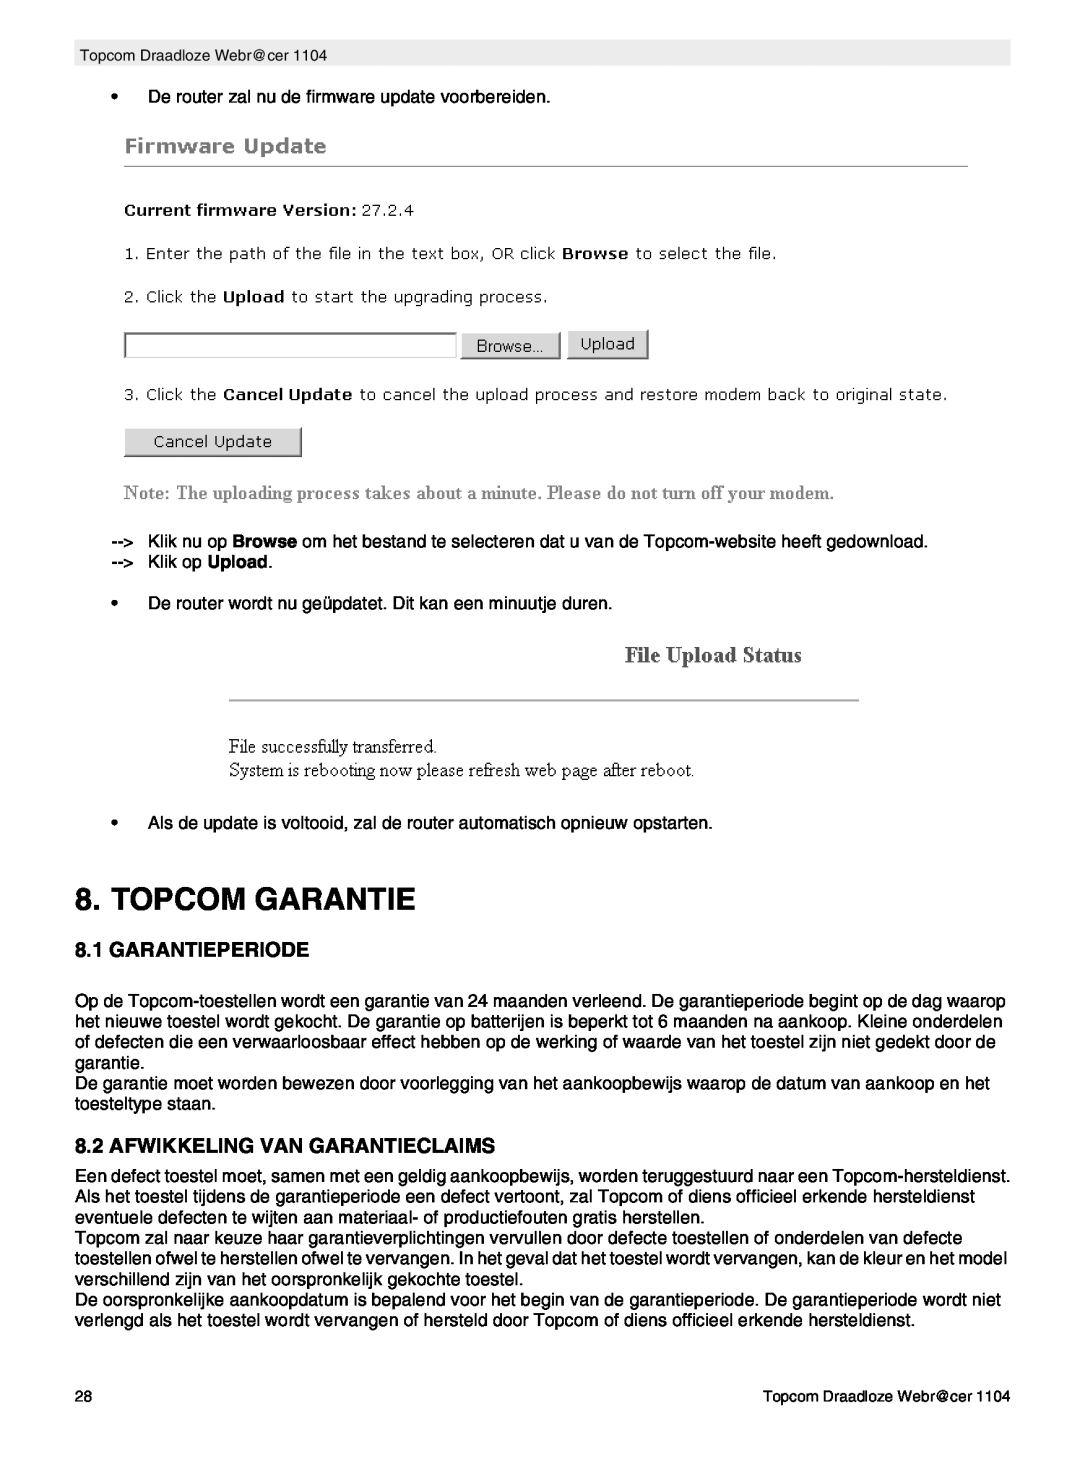 Topcom 1104 manual do utilizador Topcom Garantie, Garantieperiode, Afwikkeling Van Garantieclaims 